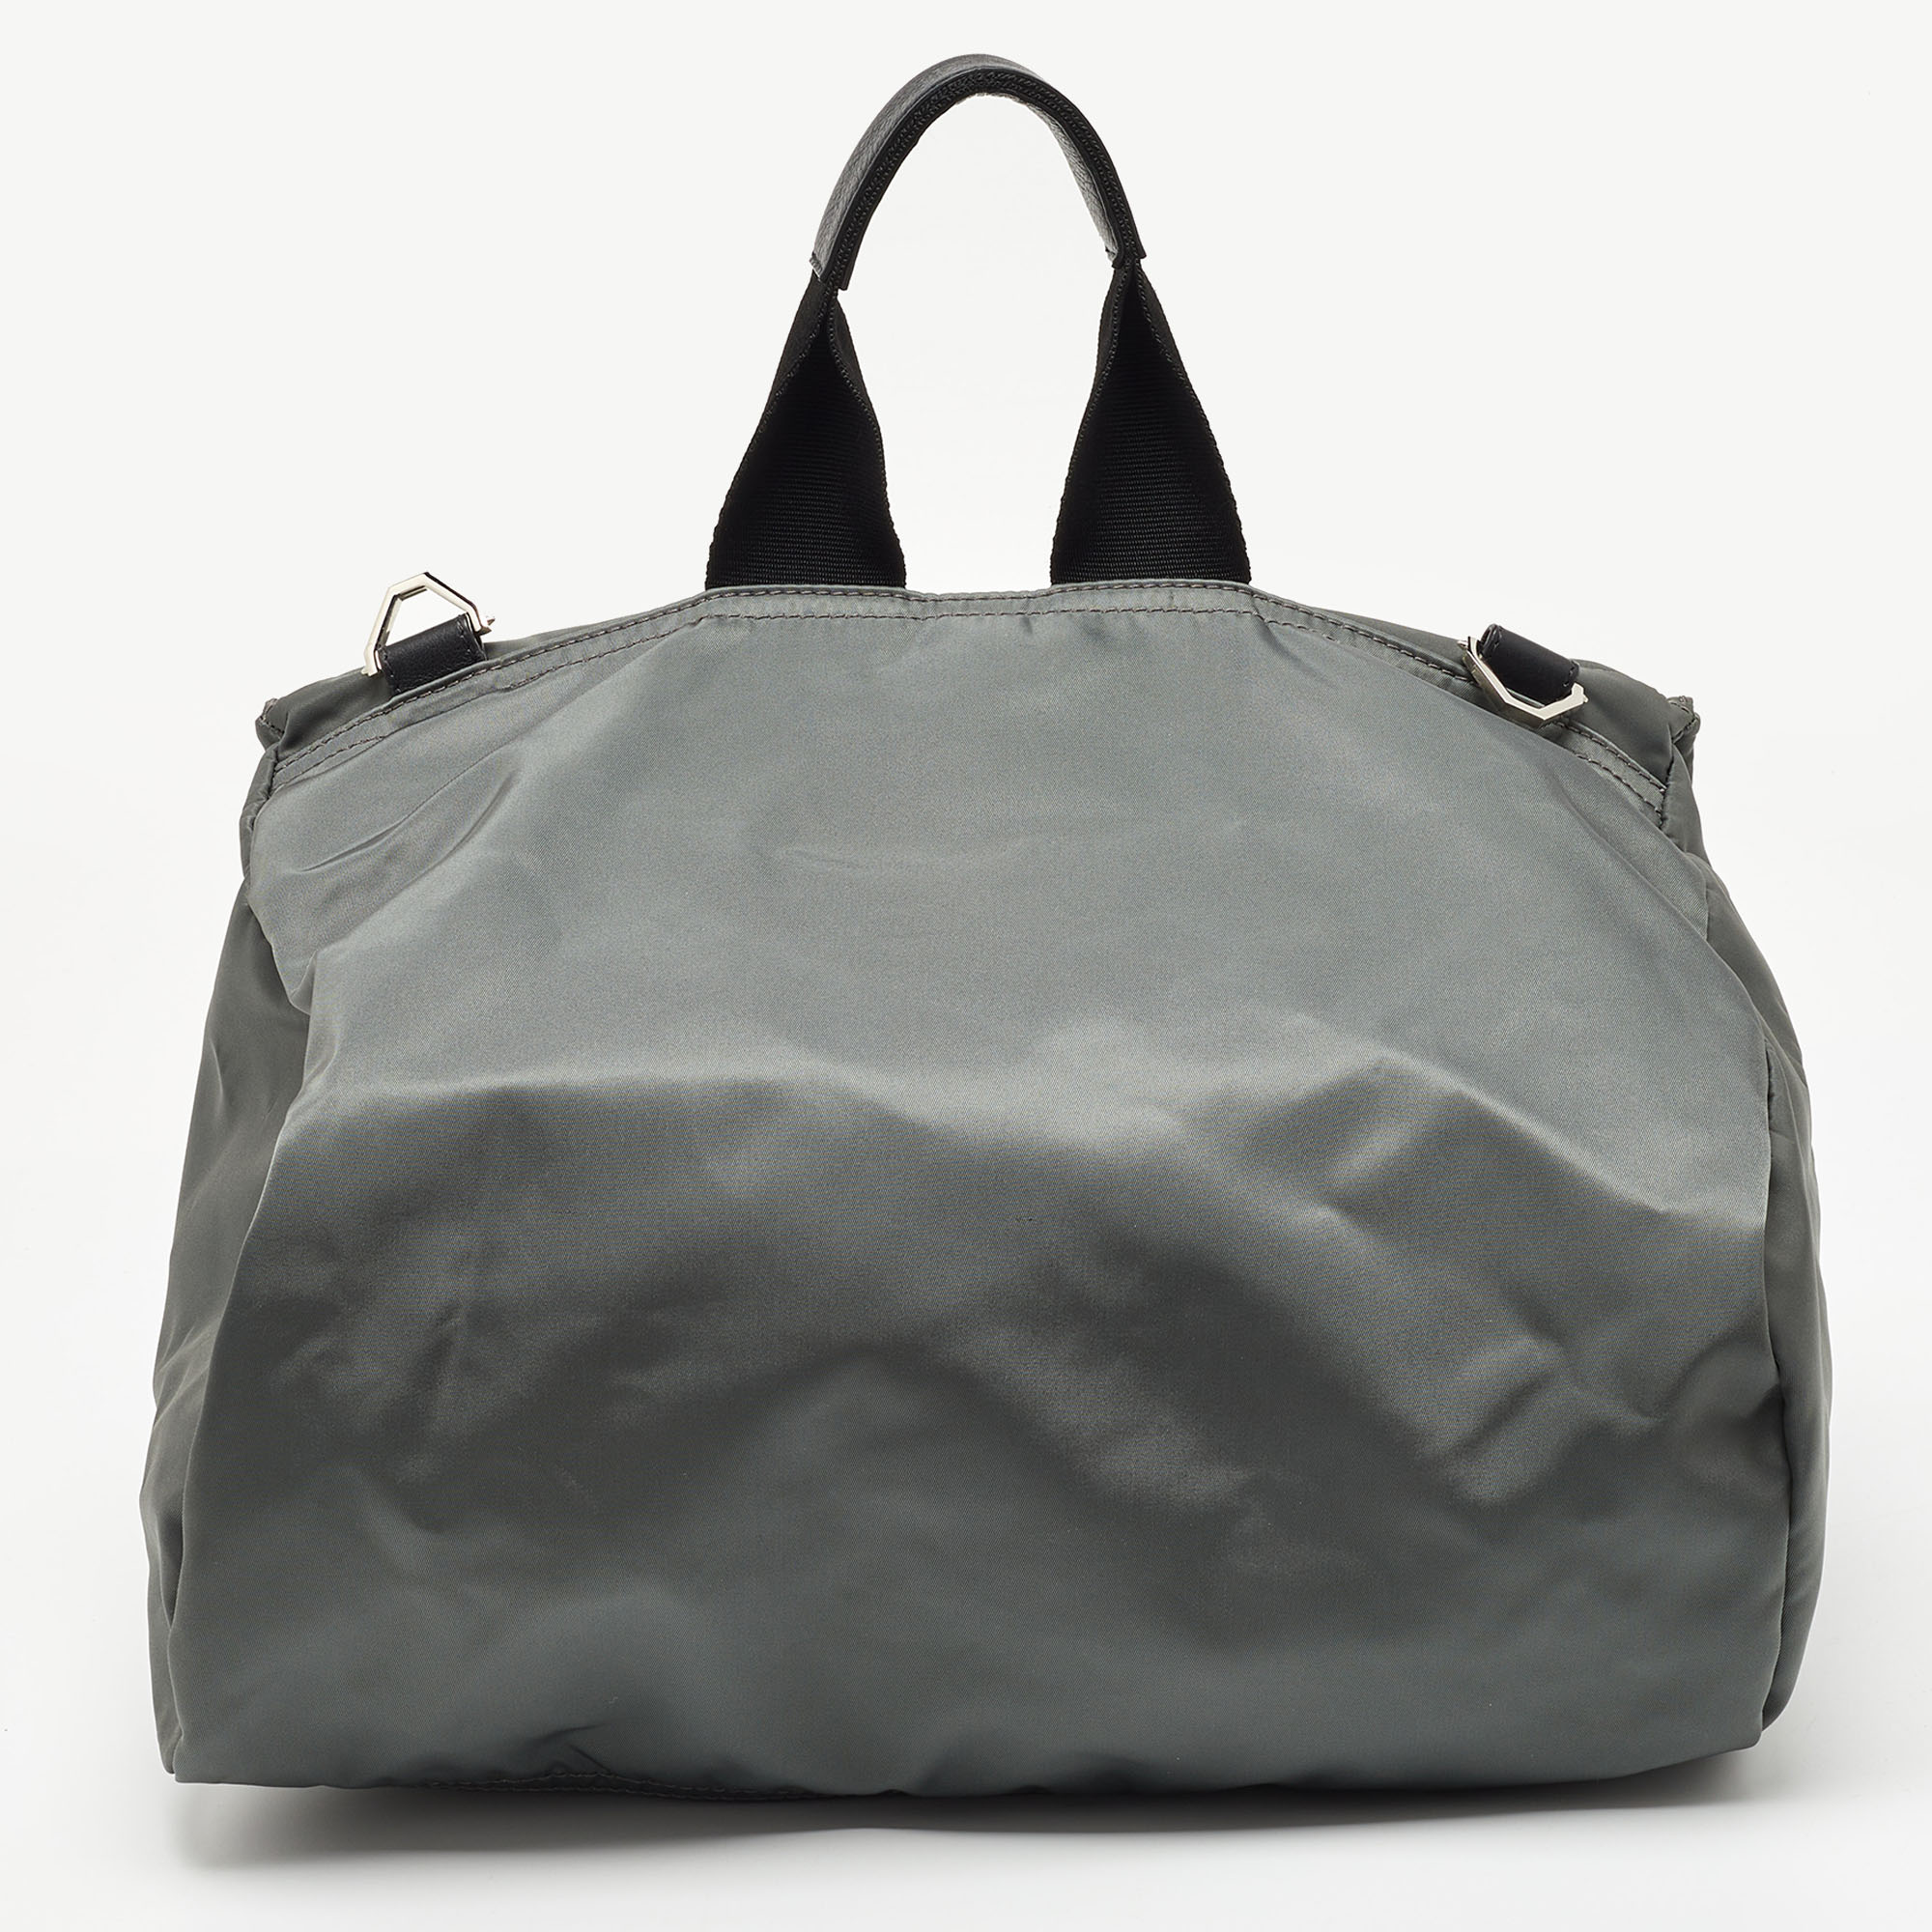 Givenchy Grey/Black Nylon Pandora Top Handle Bag